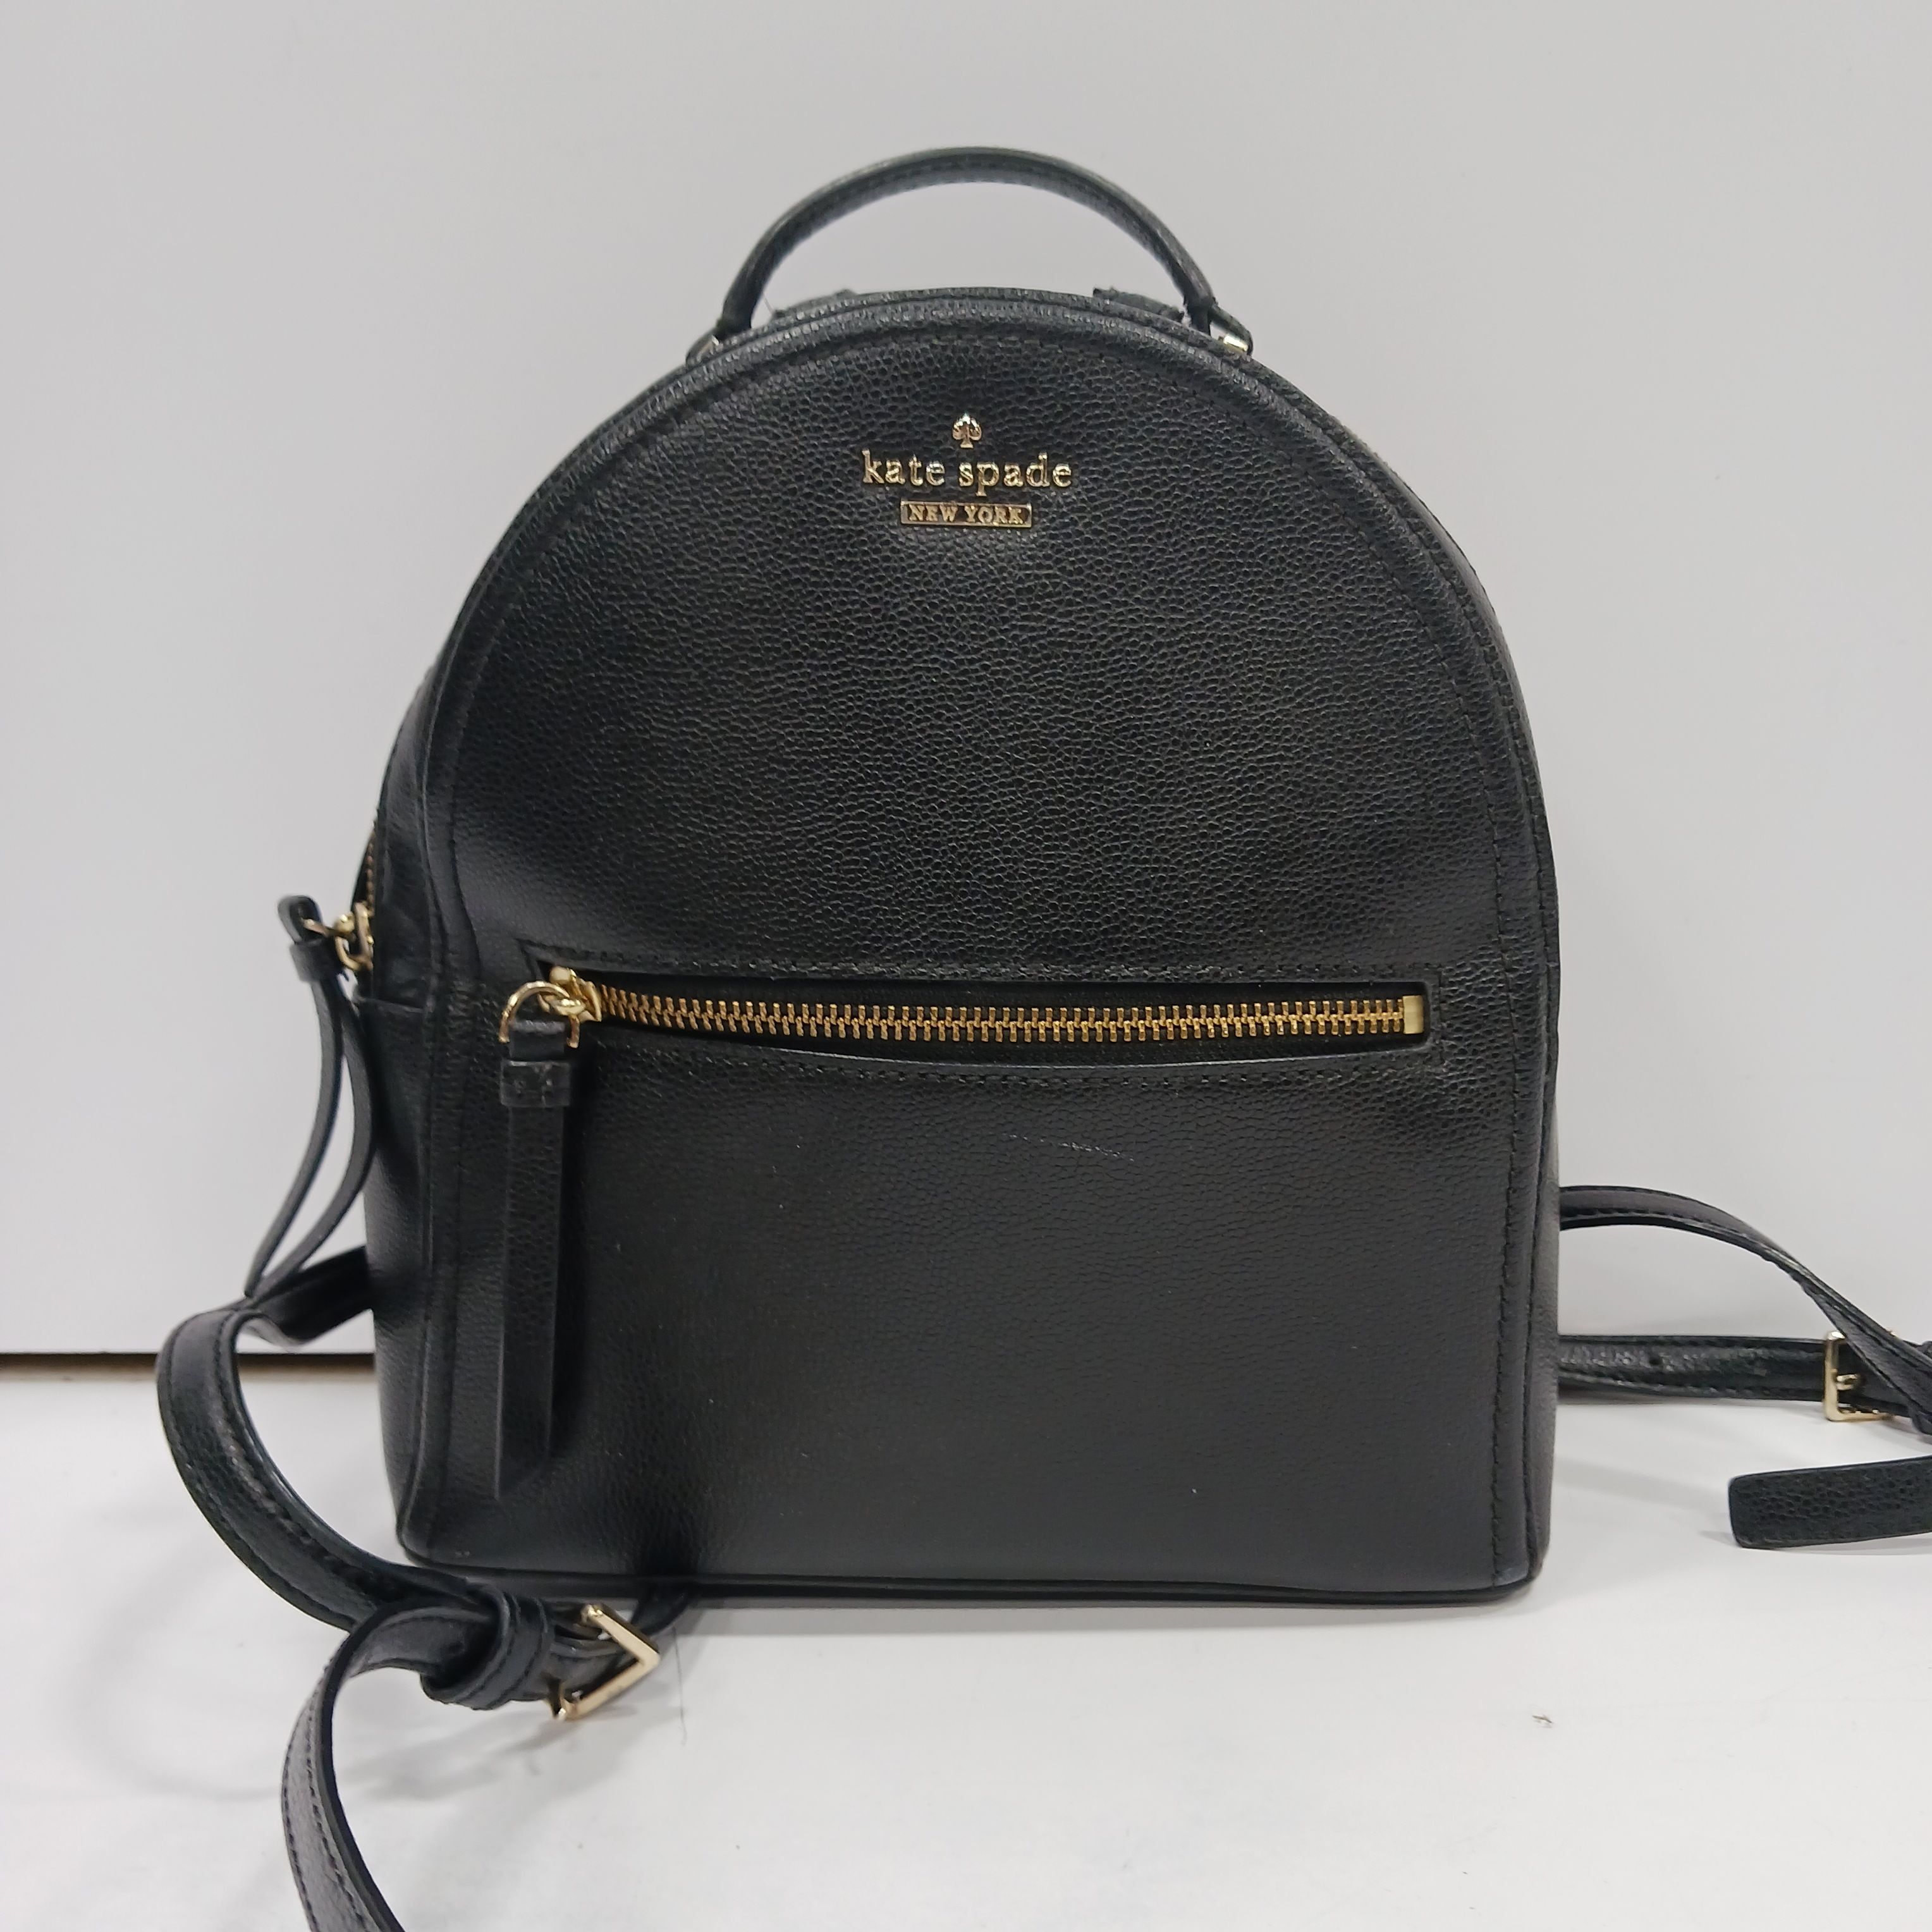 Black Leather Kate Spade Backpack Purse - Women's handbags